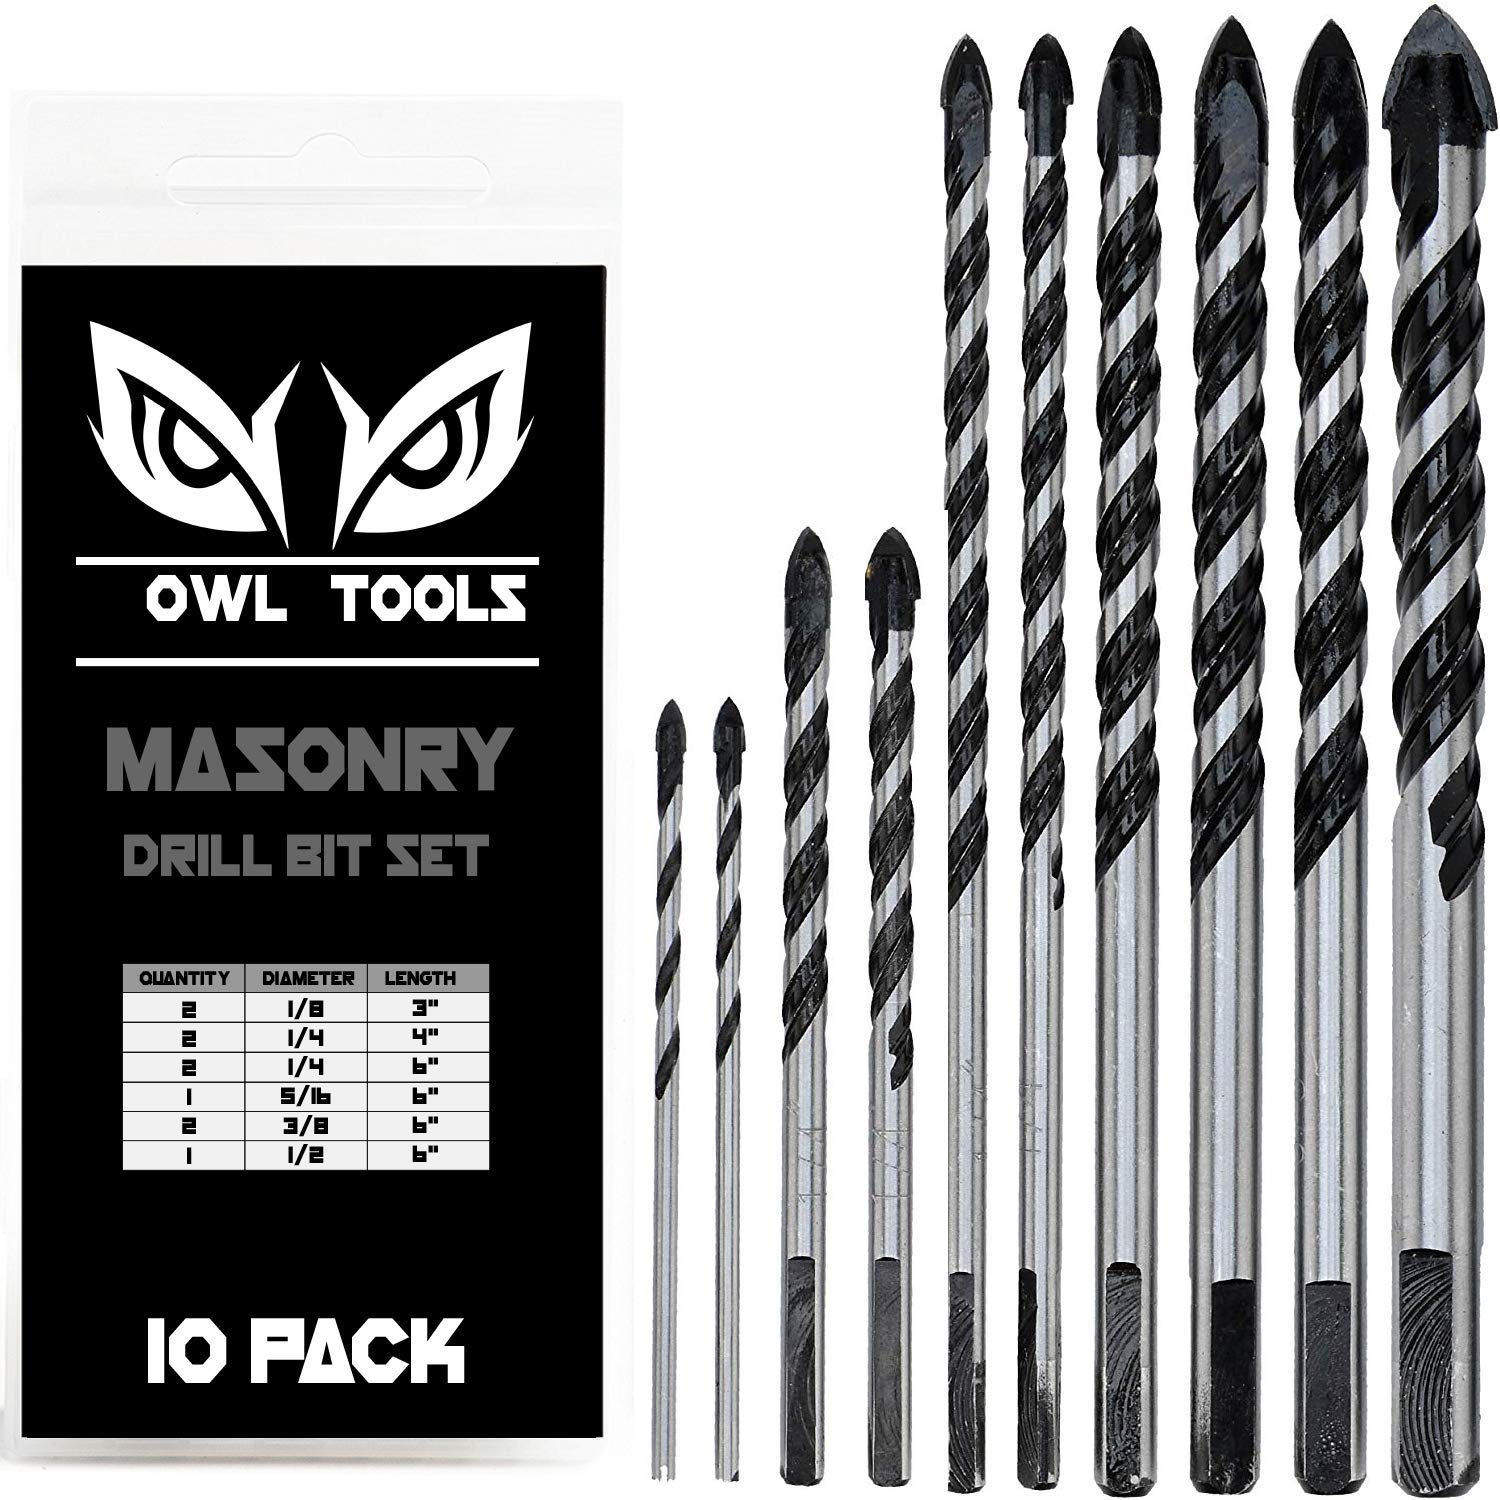 Owl Tools Masonry Drill Bit Set (10 Pack in 1/8